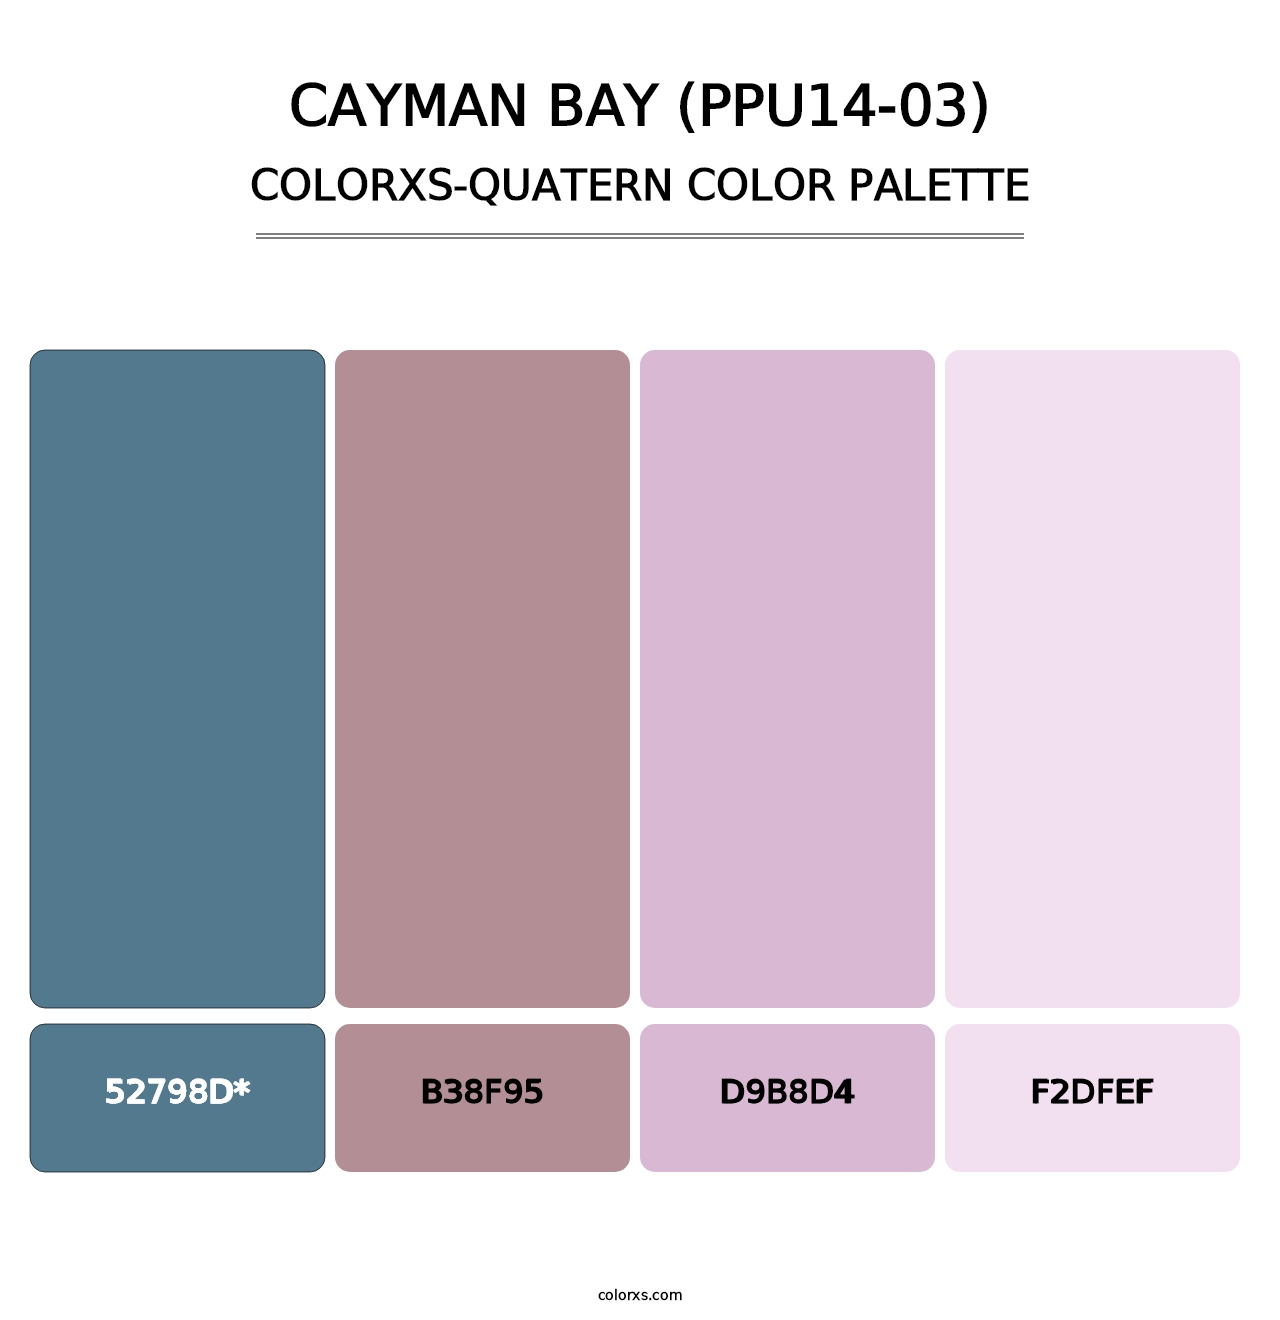 Cayman Bay (PPU14-03) - Colorxs Quatern Palette